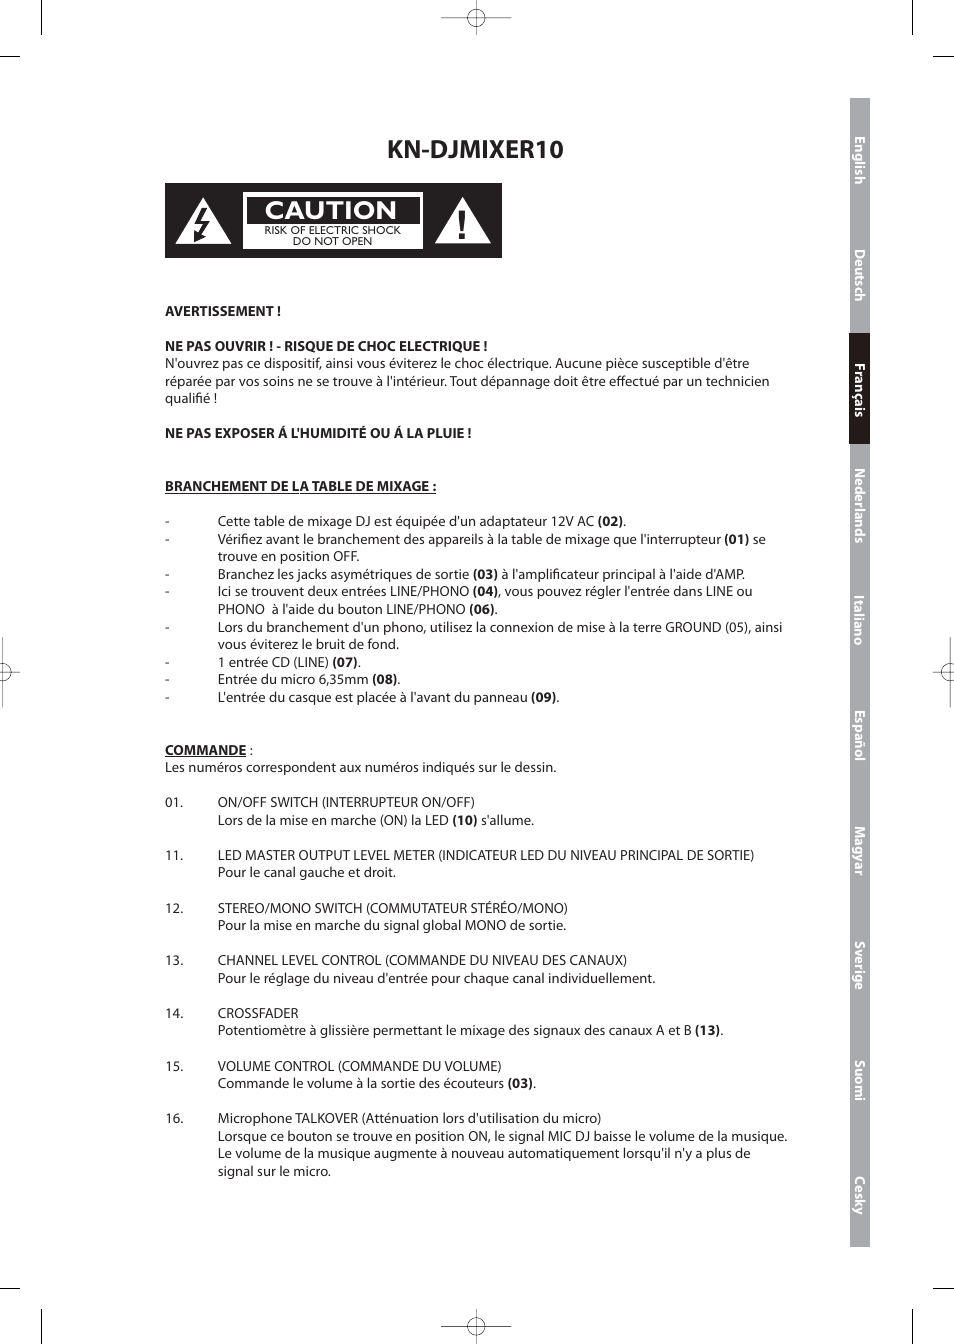 Kn-djmixer10, Caution | Konig Electronic 3-channel DJ mixer User Manual |  Page 7 / 22 | Original mode